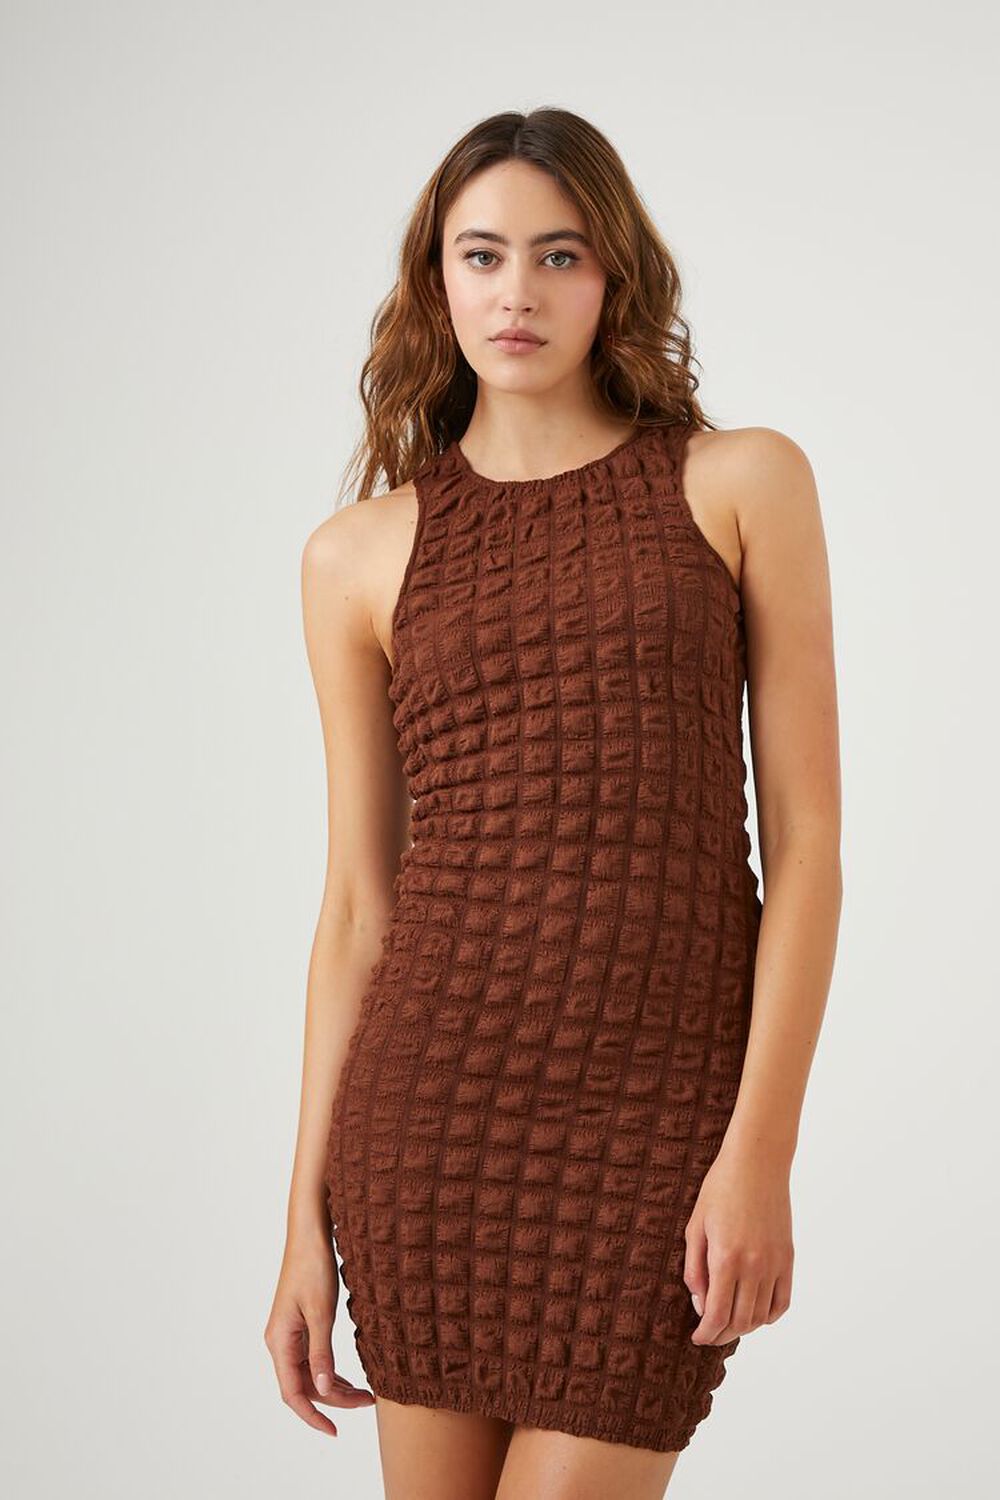 CAPPUCCINO Textured Sleeveless Mini Dress, image 1